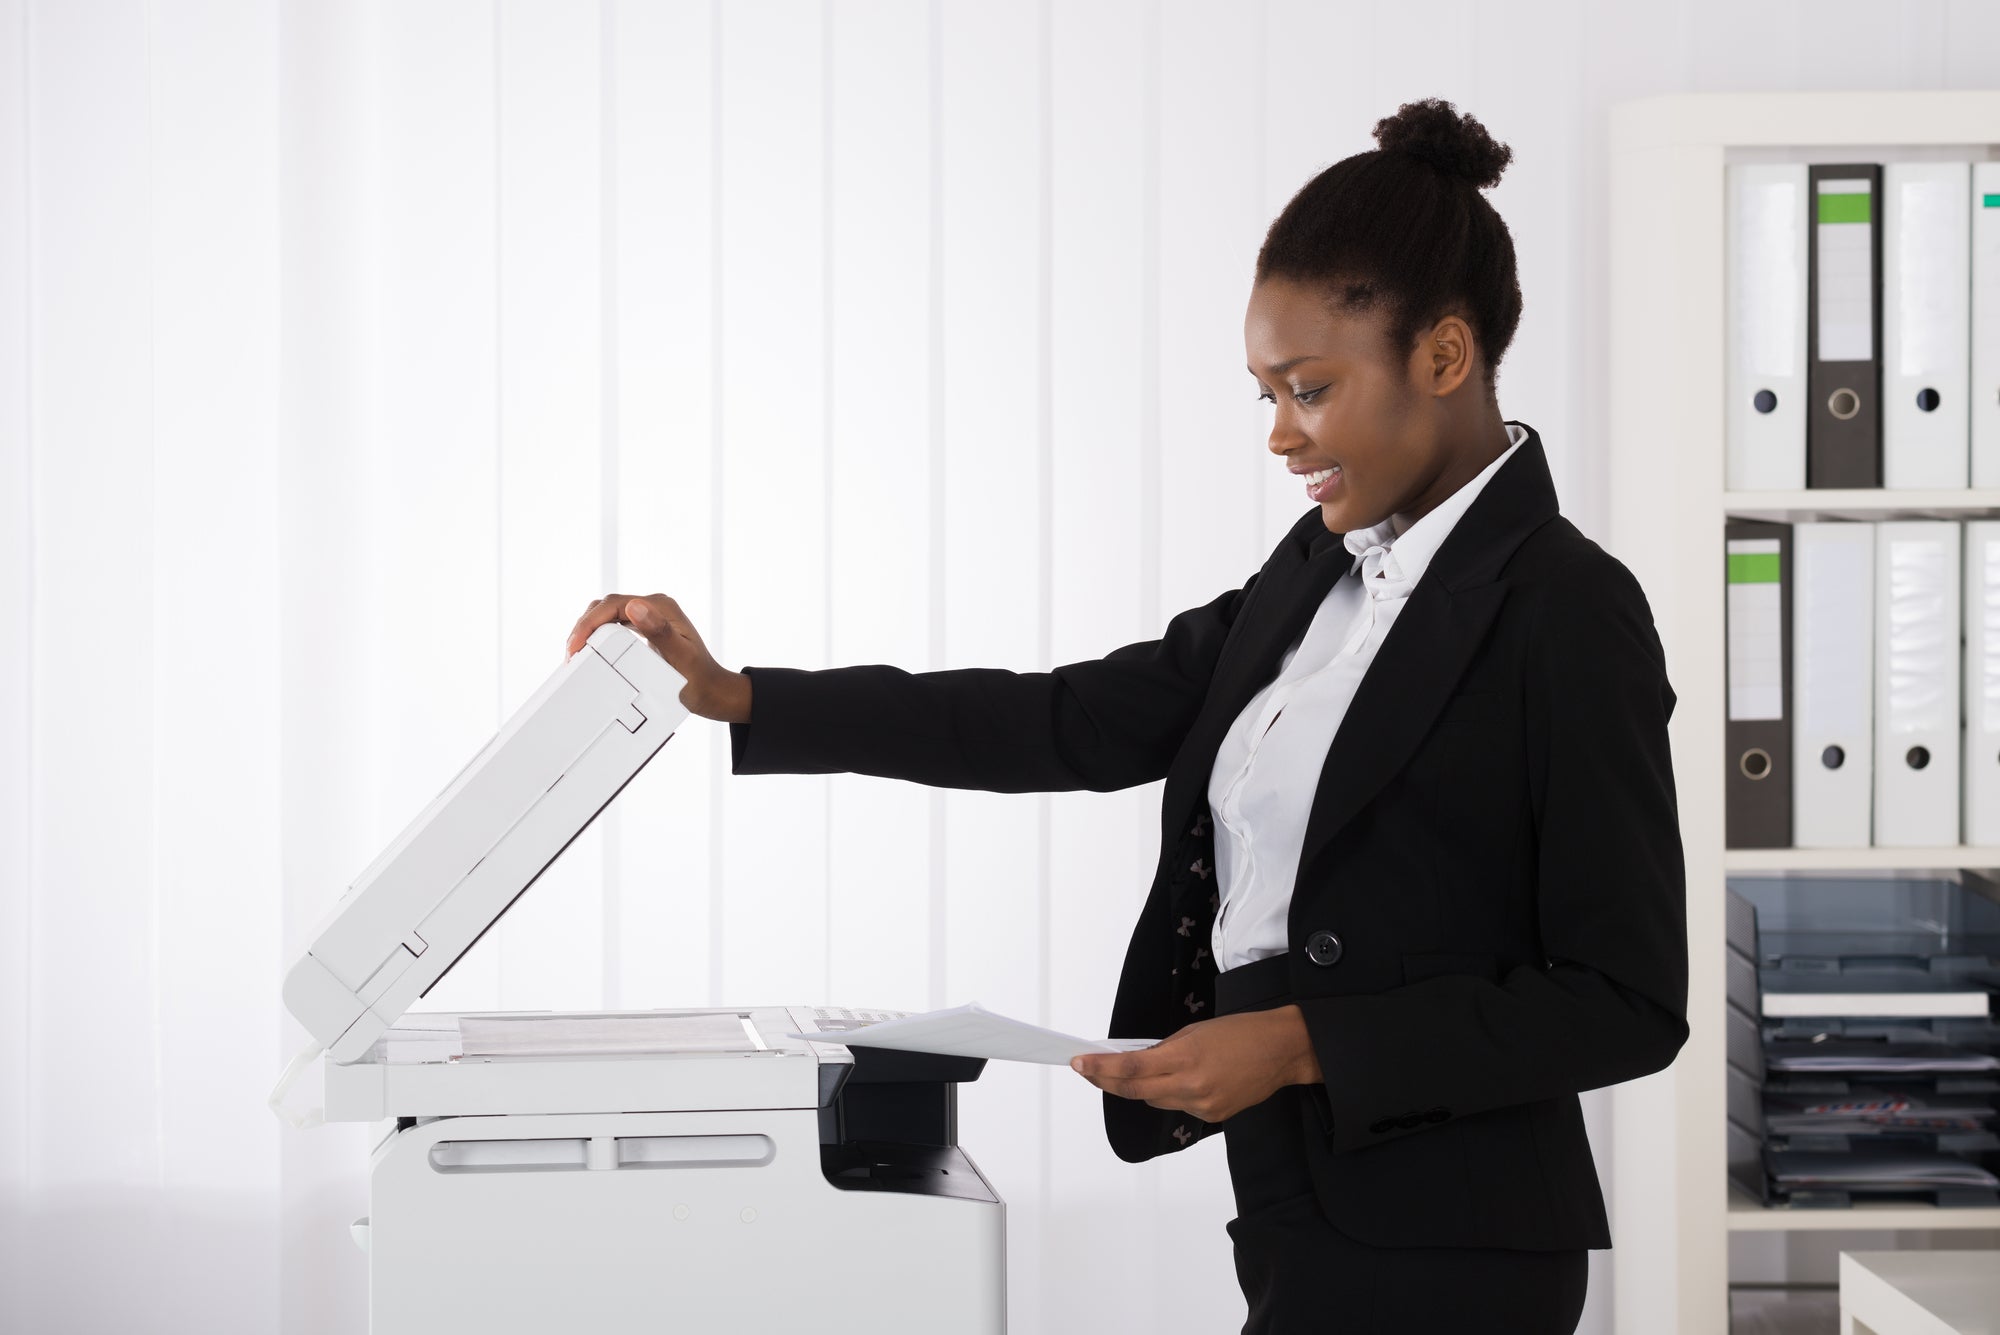 Woman smiling while at a printer